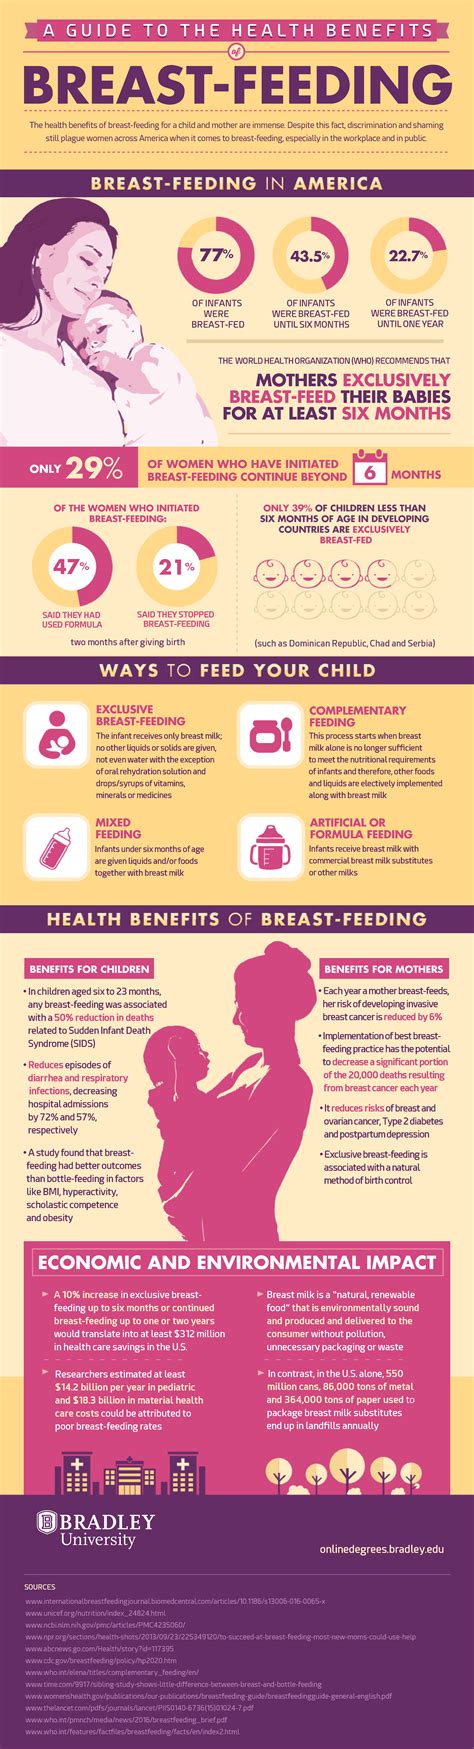 Health Benefits Of Breastmilk